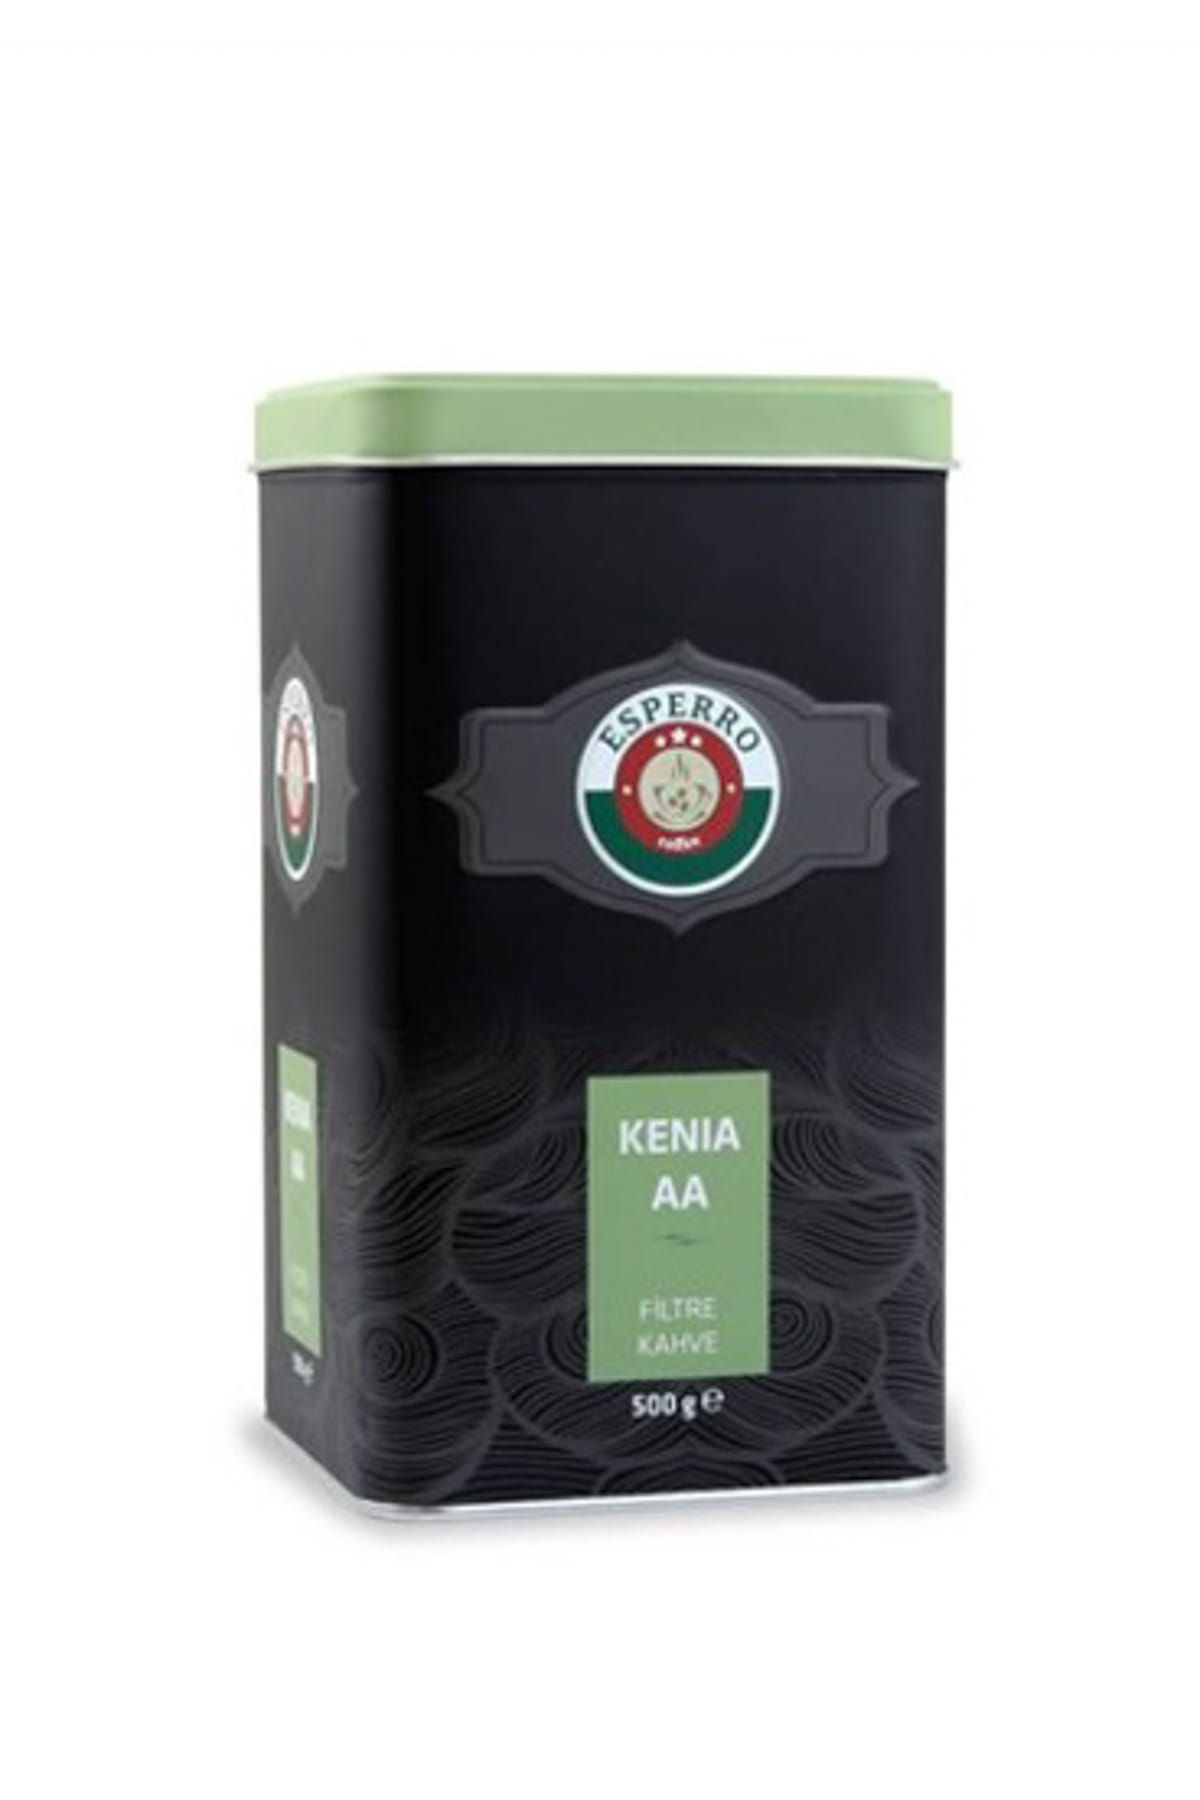 Esperro Kenia AA Filtre Kahve 500 gr